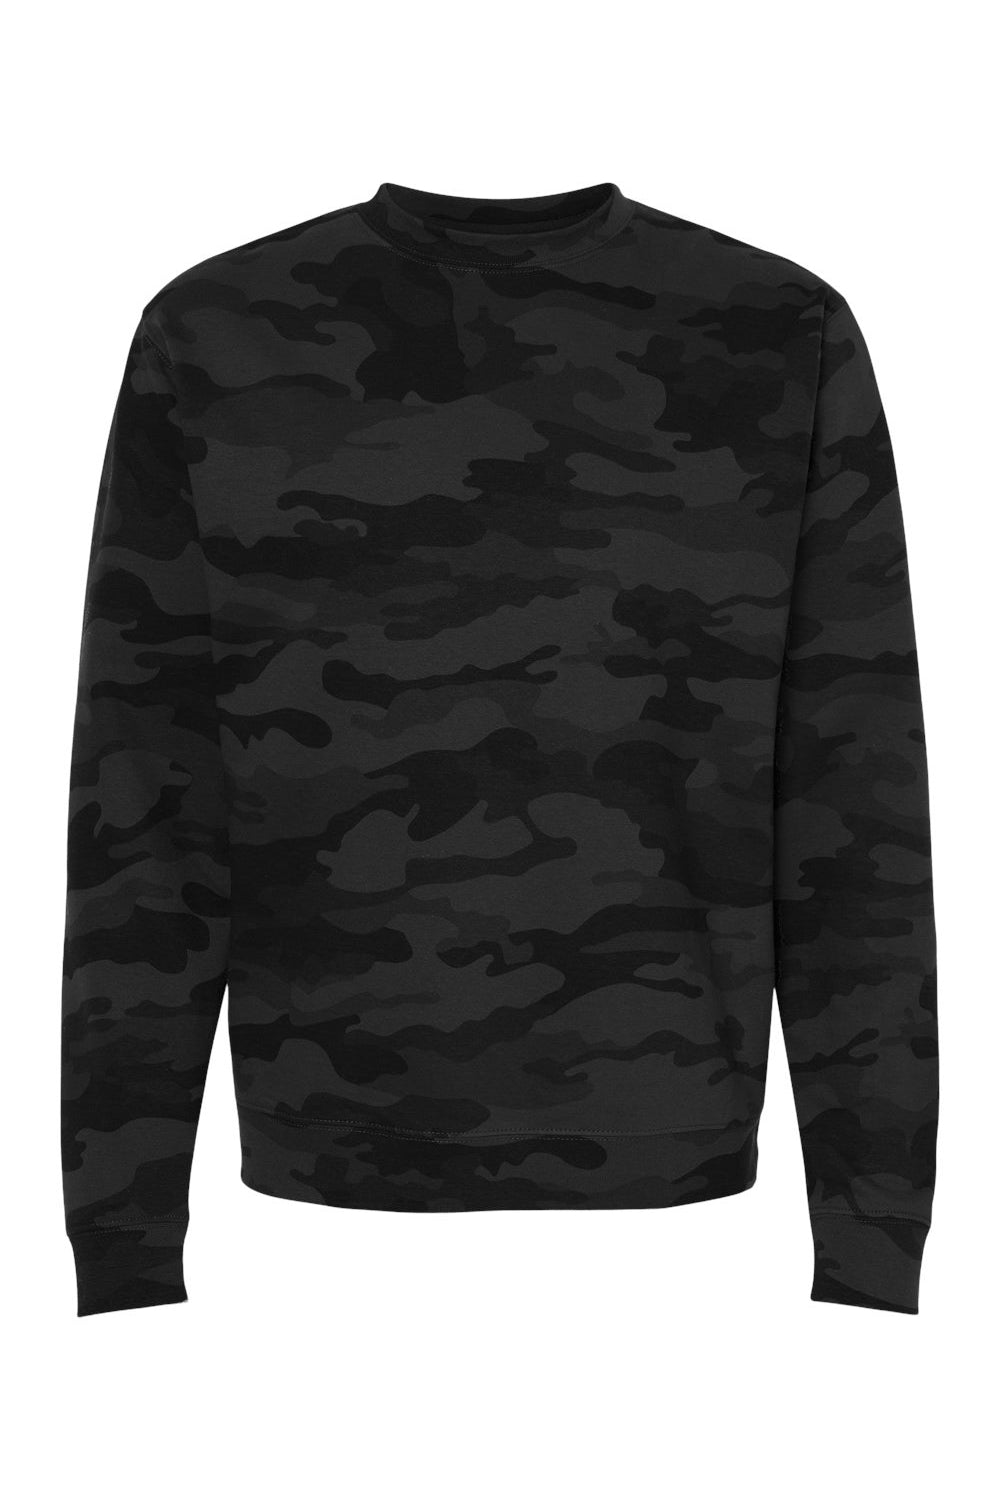 Independent Trading Co. SS3000 Mens Crewneck Sweatshirt Black Camo Flat Front